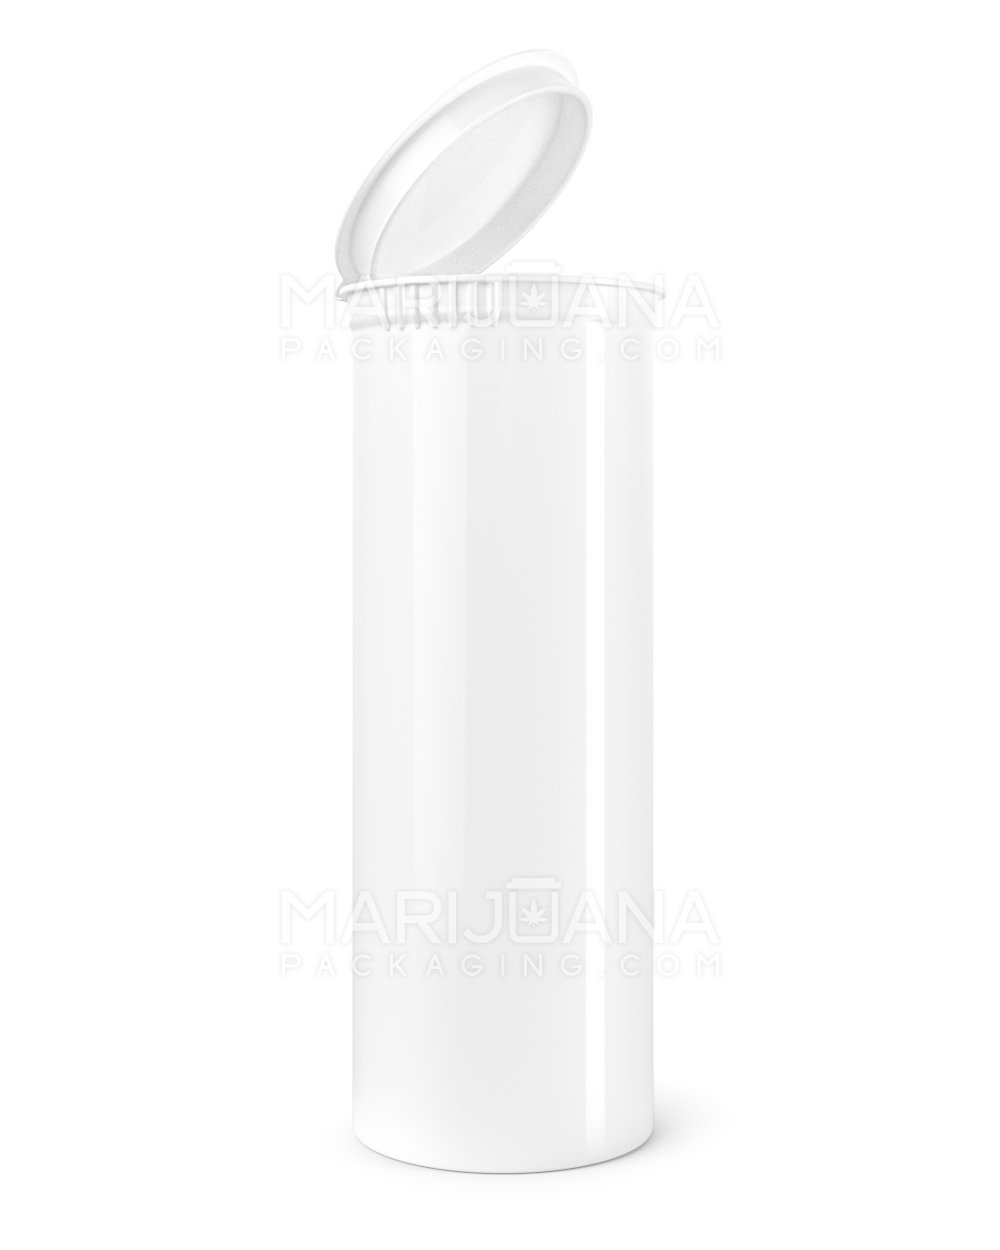 Child Resistant Opaque White Pop Top Bottles | 60dr - 14g | Sample - 1